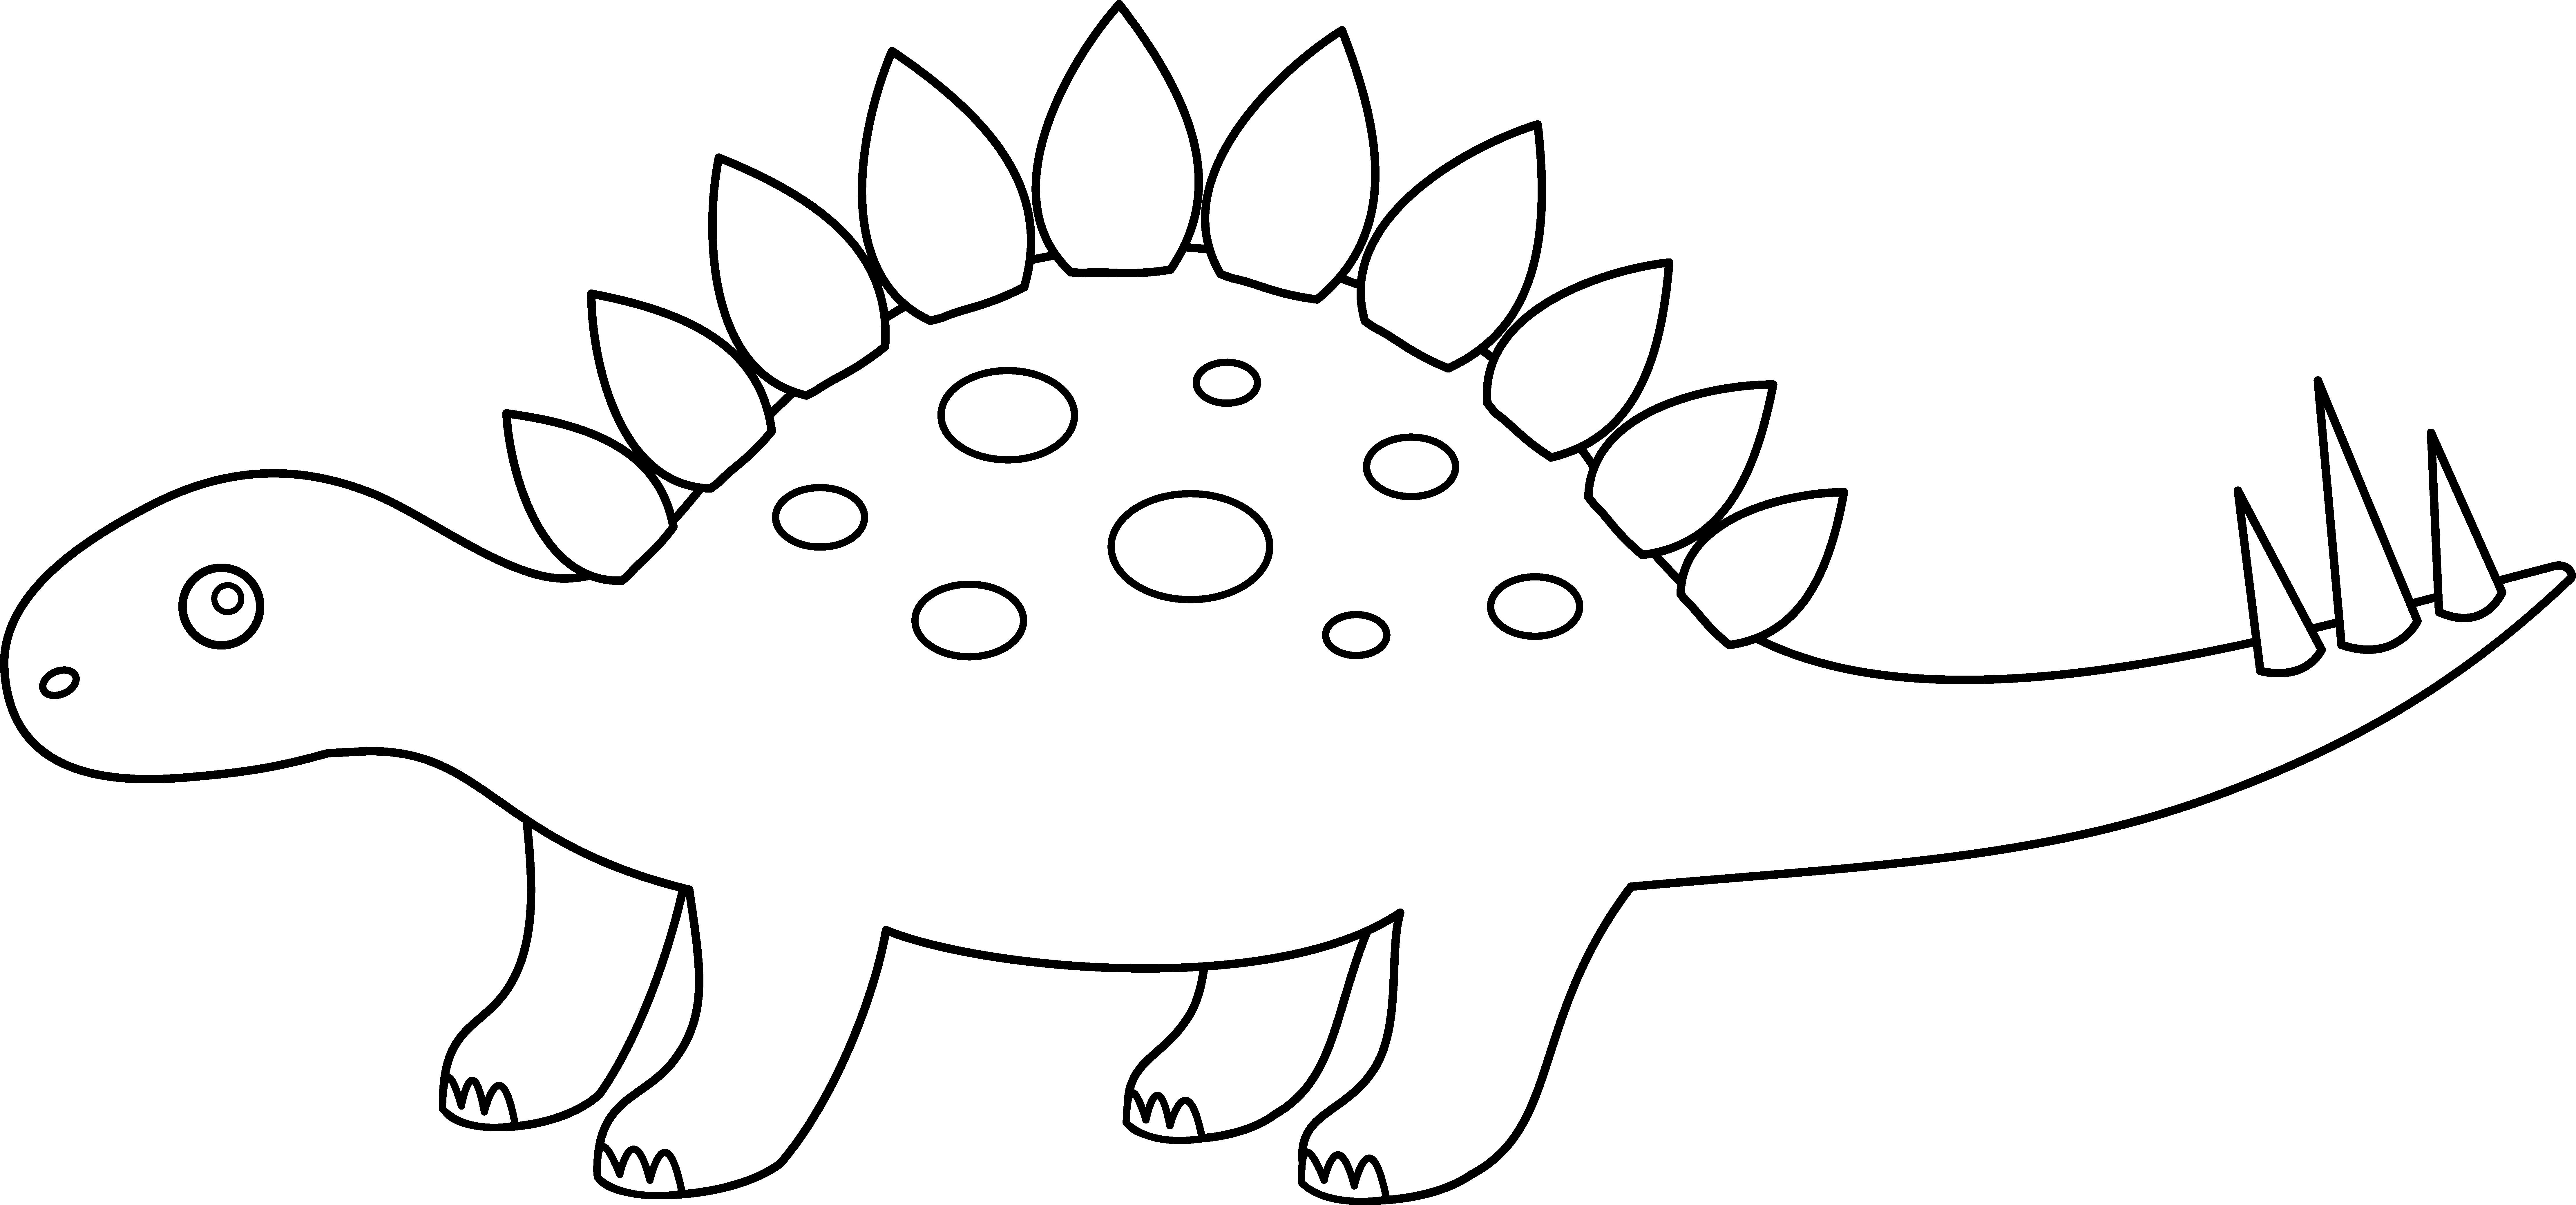 Stegosaurus Coloring Page - Free Clip Art